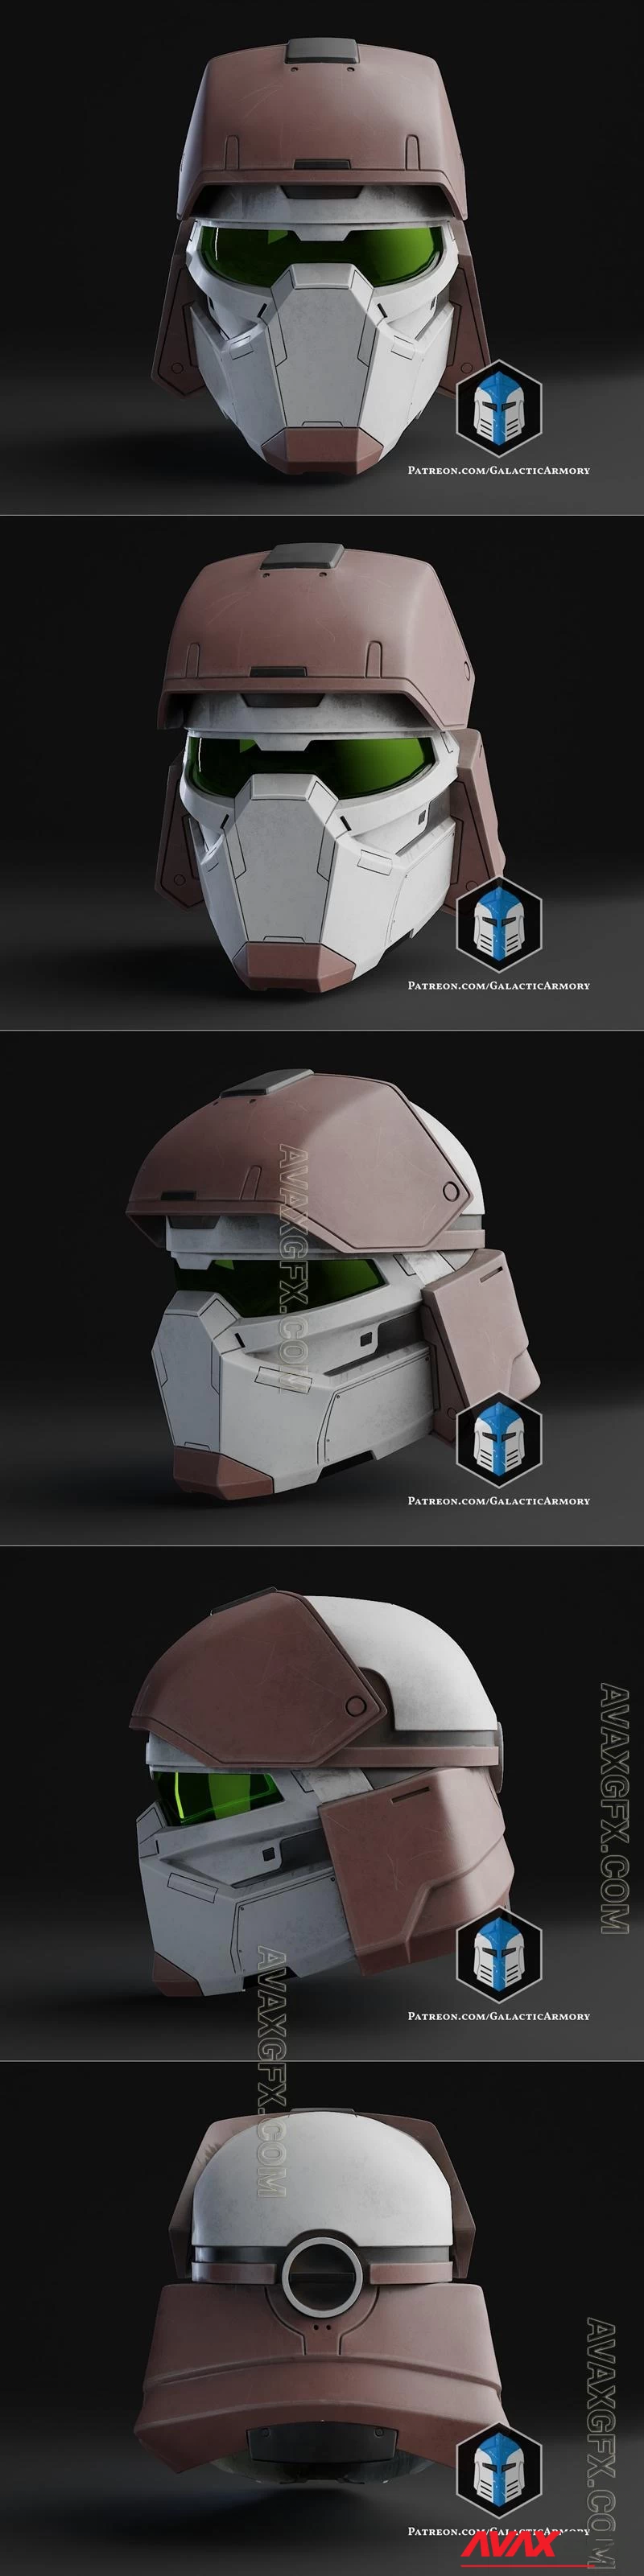 Galactic Spartan - Halo-Star Wars Helmet Mashup